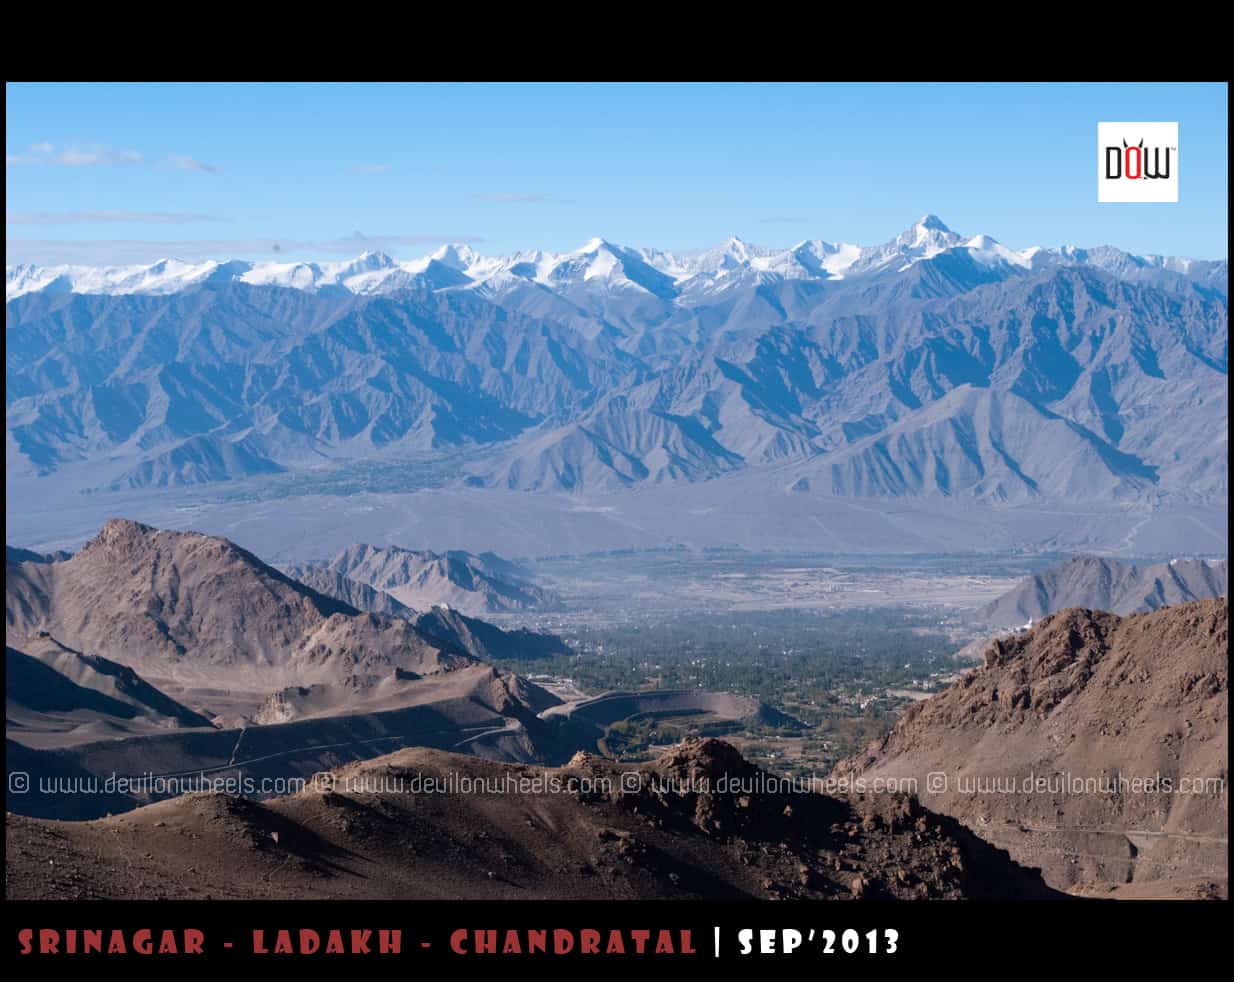 Stok Range, guarding the Heaven called Ladakh